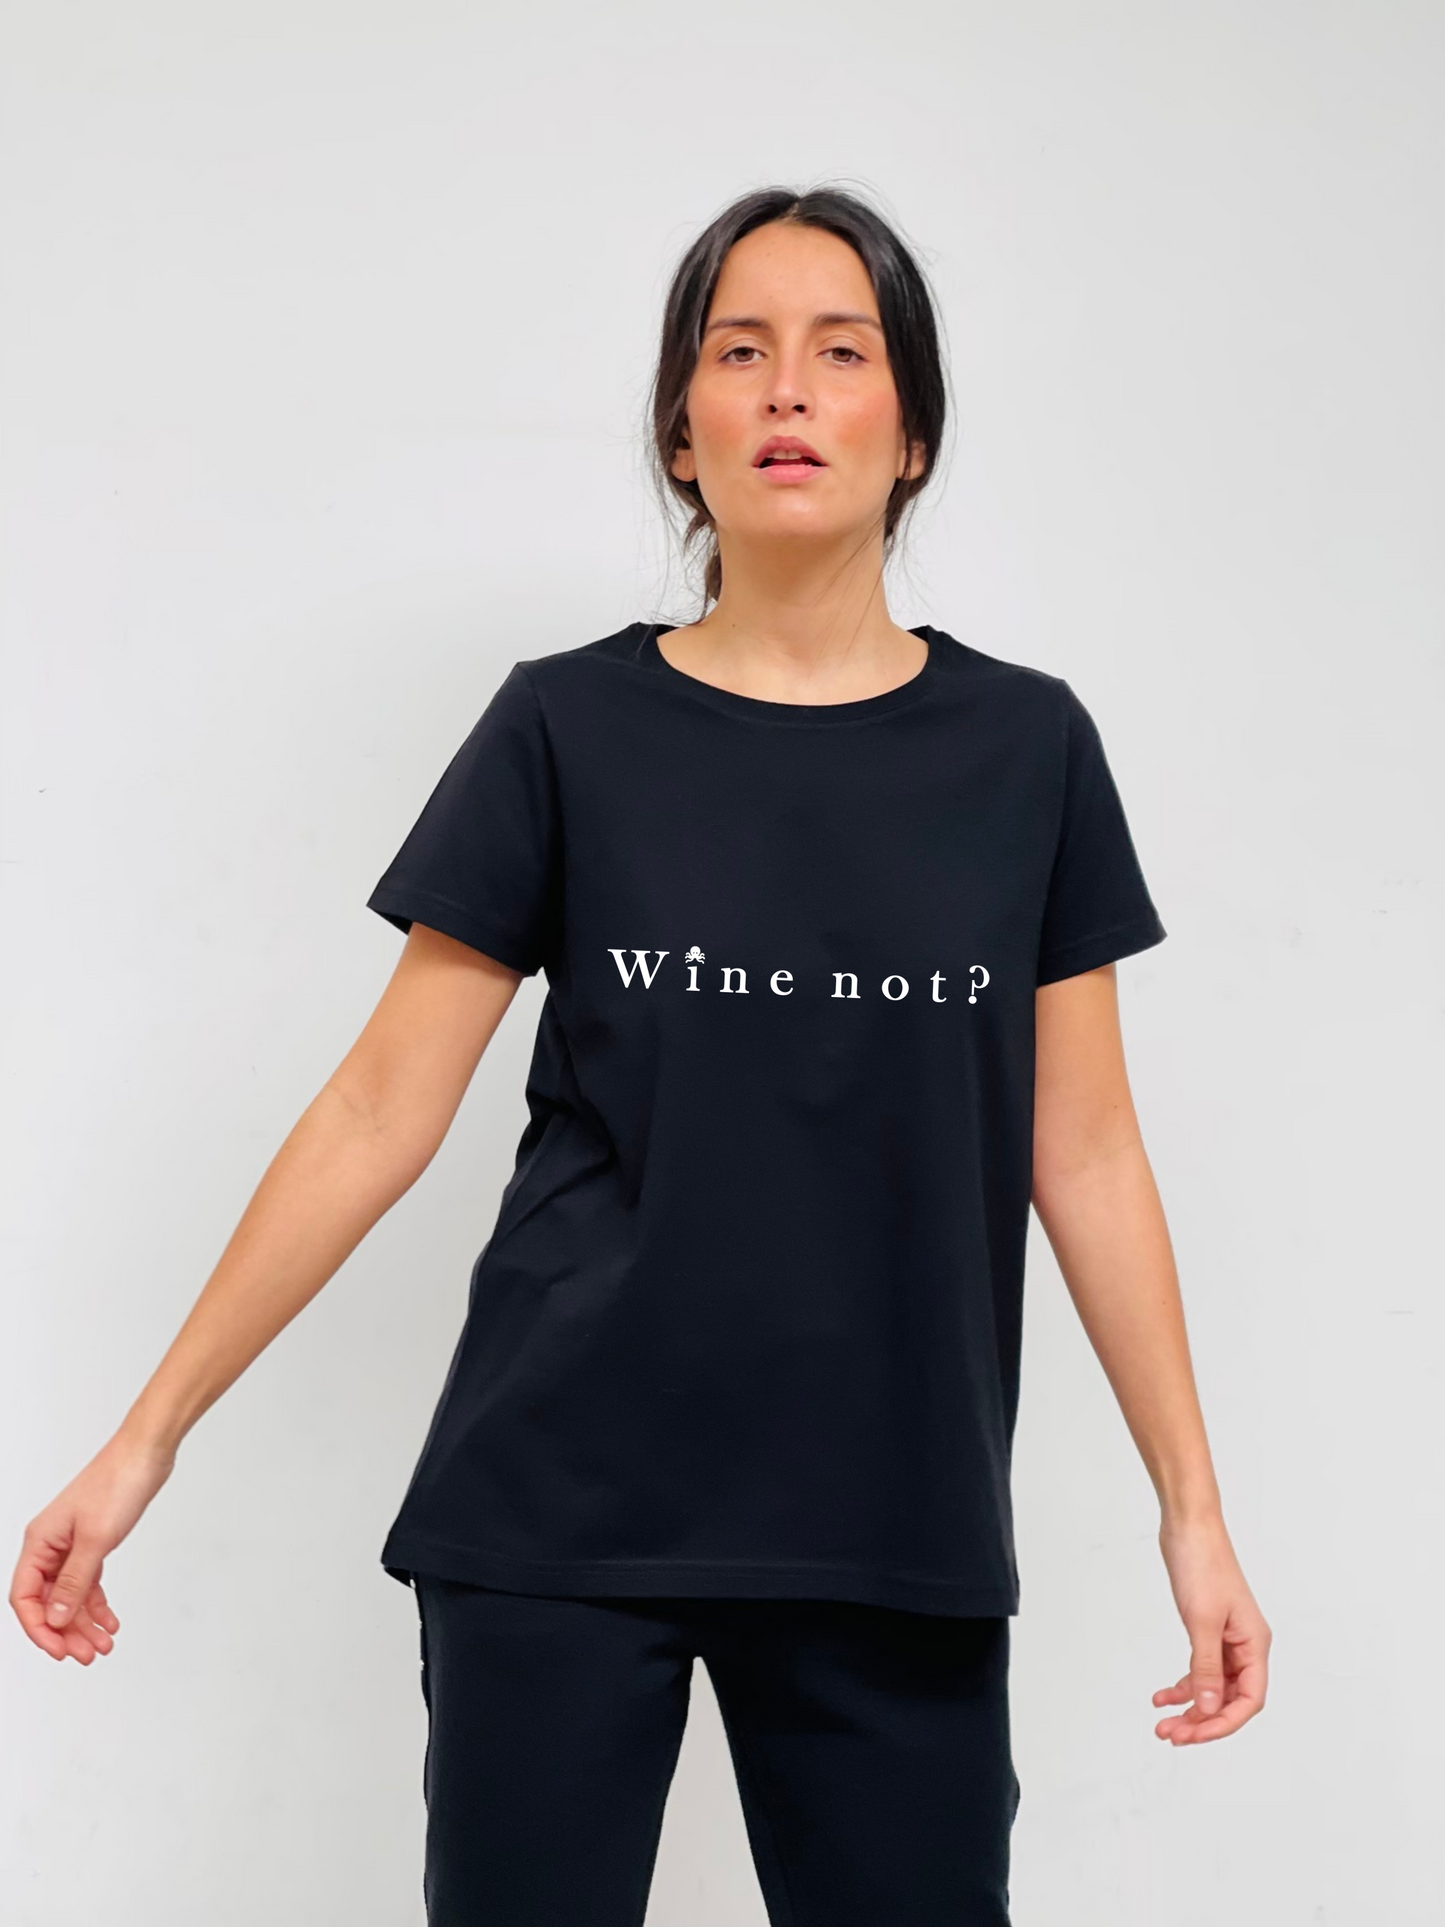 Camisetas logo pulpo SNOC - CAMISETA WOMAN WINE NOT?  